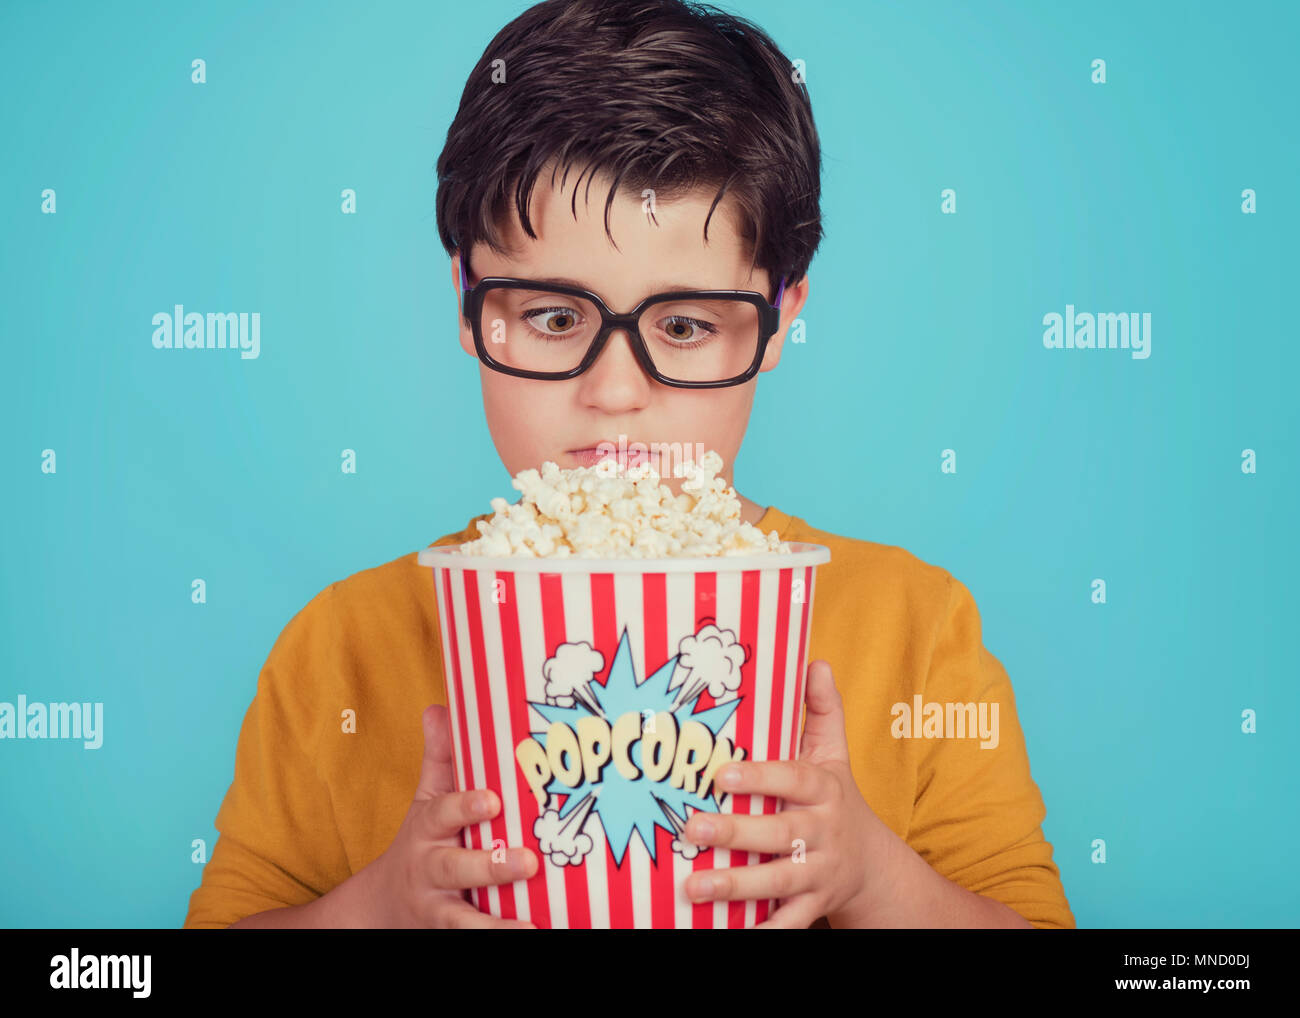 little boy child with popcorn on blue background Stock Photo